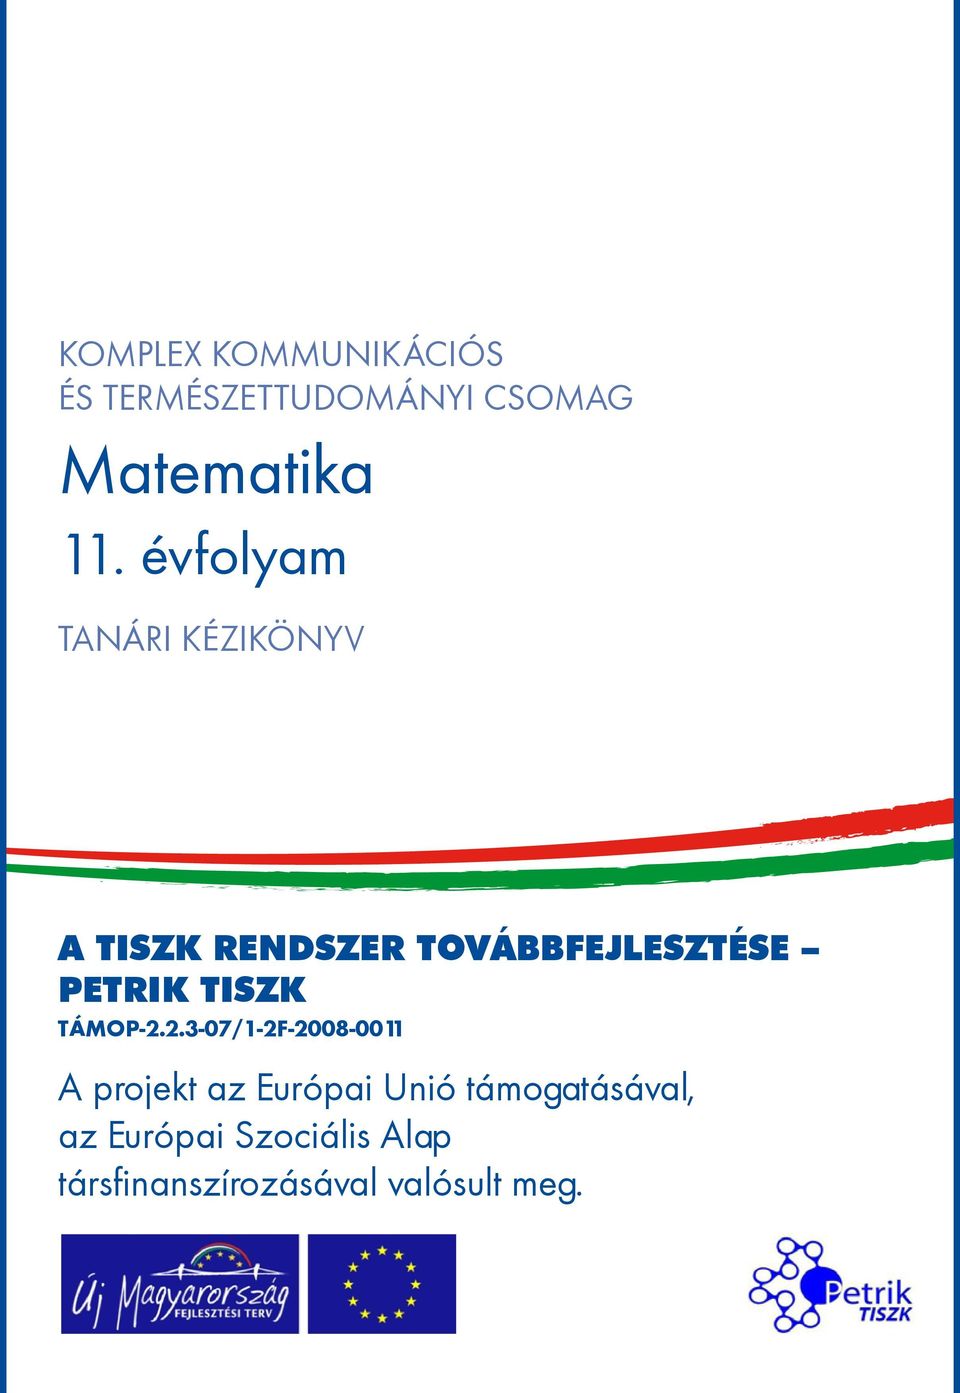 TISZK TÁMOP-2.